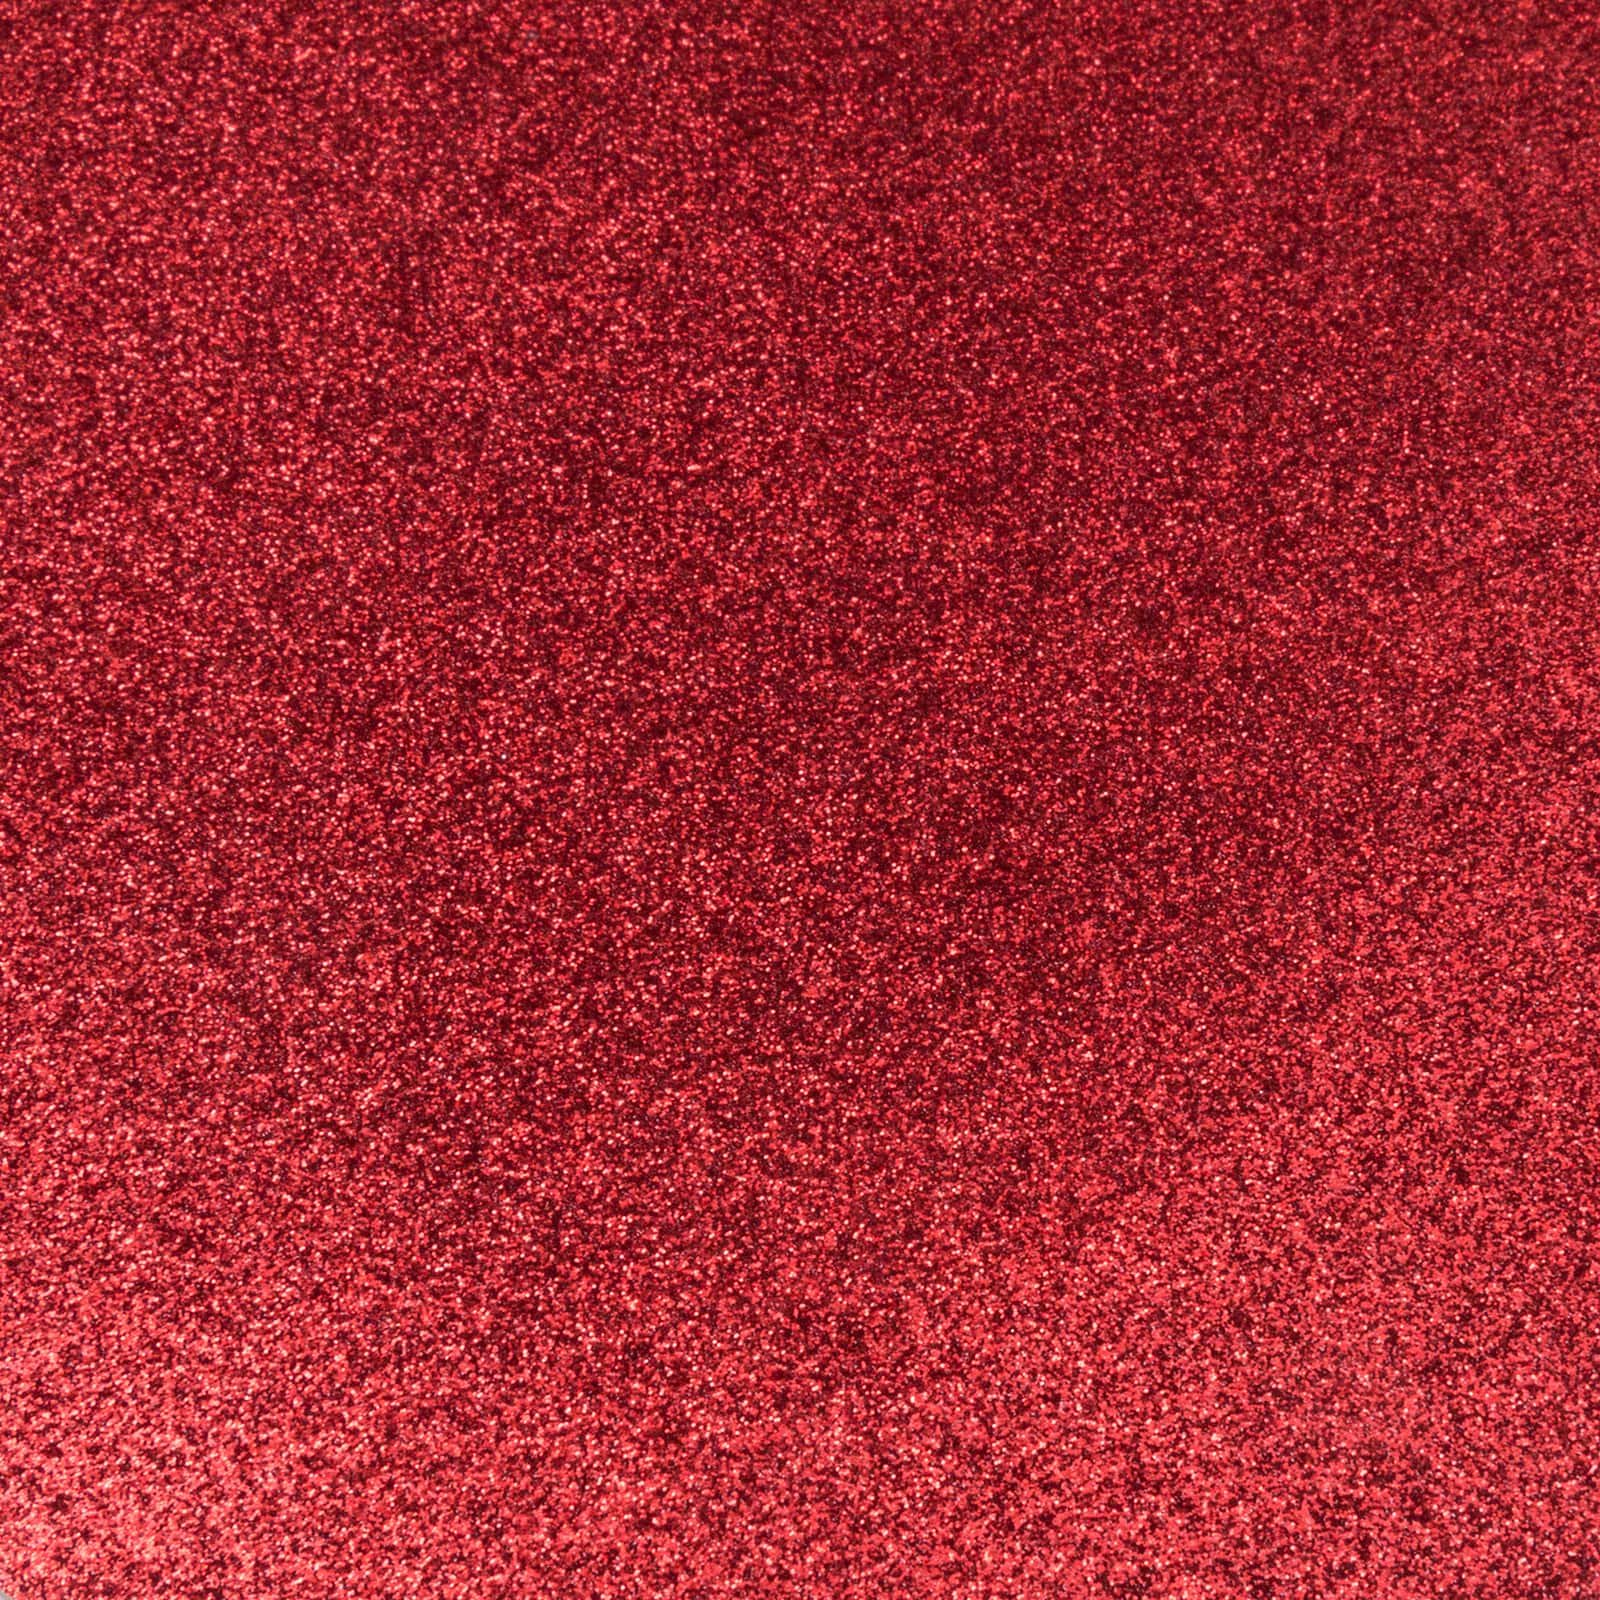 Micro Fine Glitter Paper, Red/Lt. Copper, 5 x 6, 2 Sheets